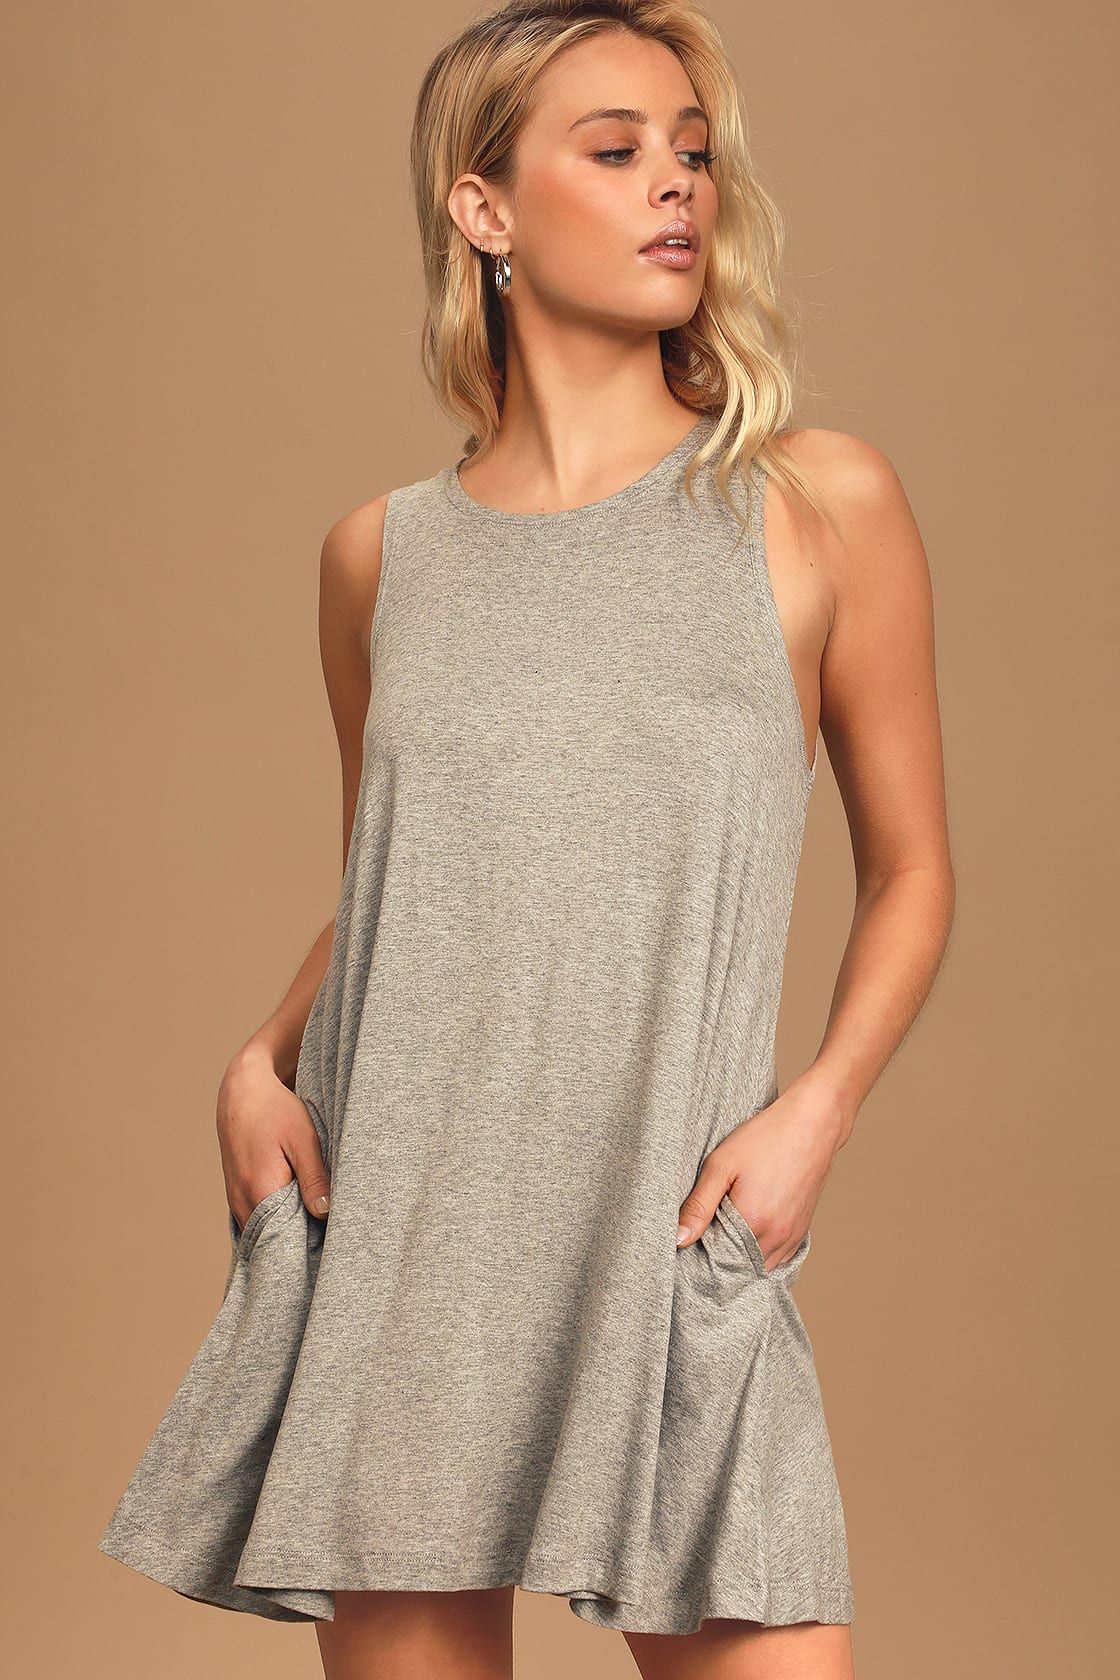 Simply Flawless Heather Grey Sleeveless Swing Dress | Lulus